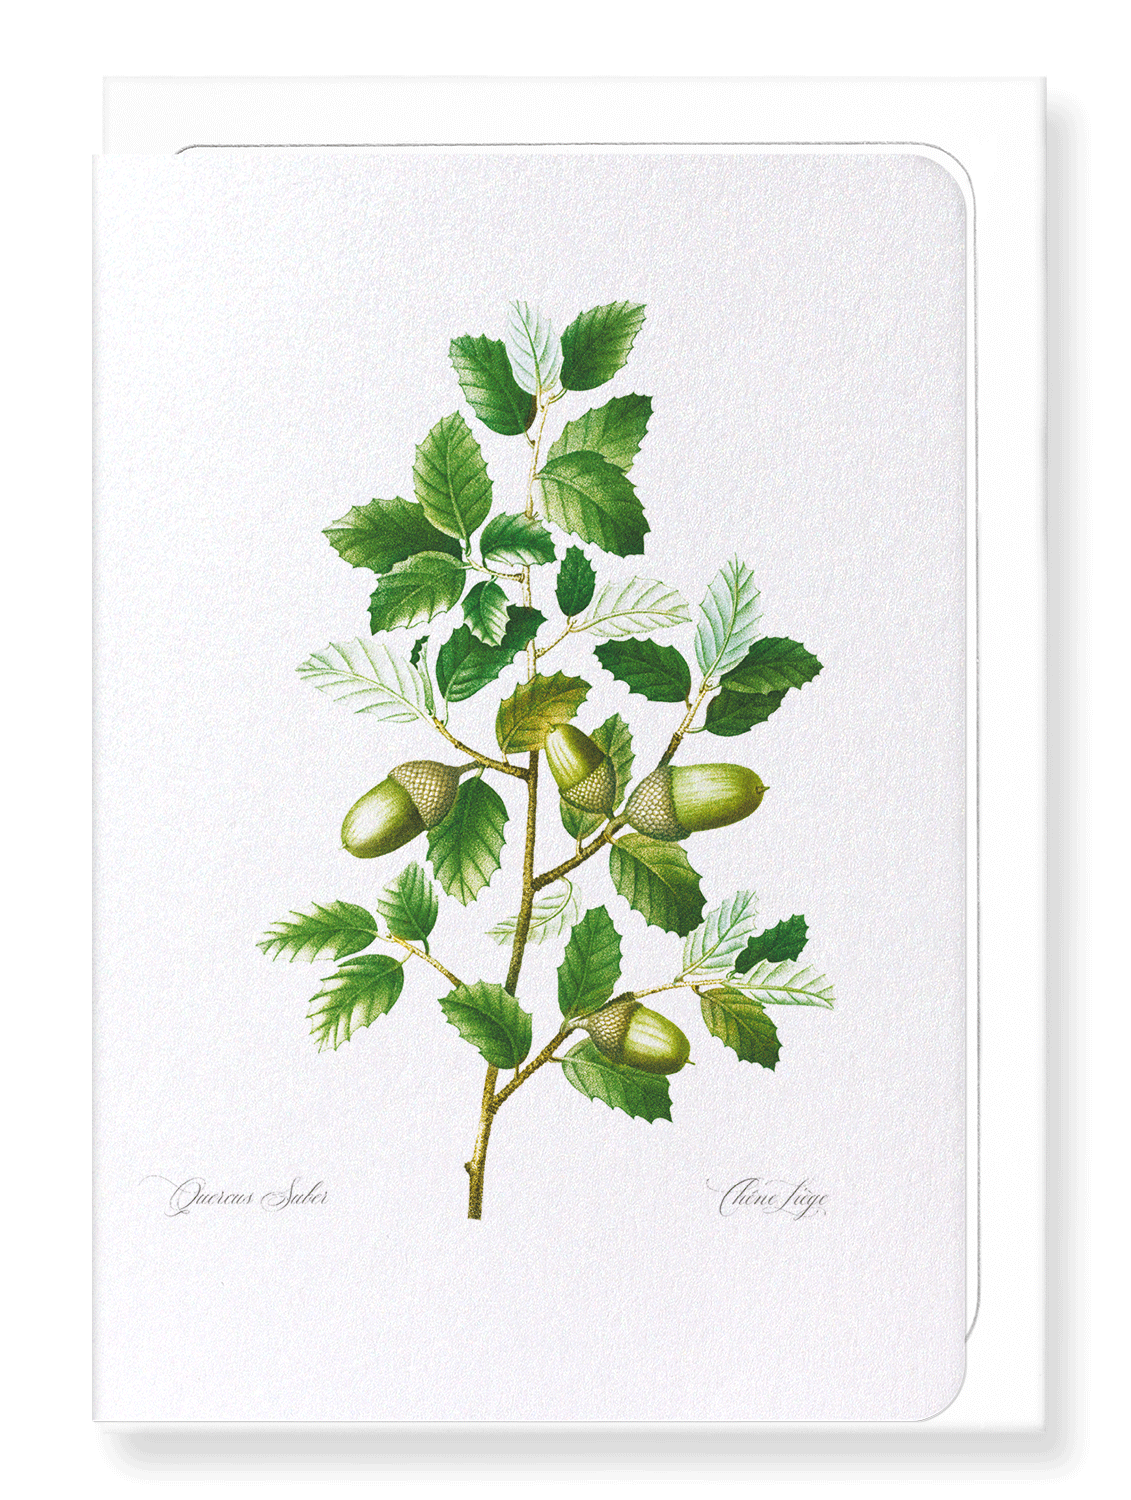 CORK OAK TREE ACORNS: Botanical Greeting Card